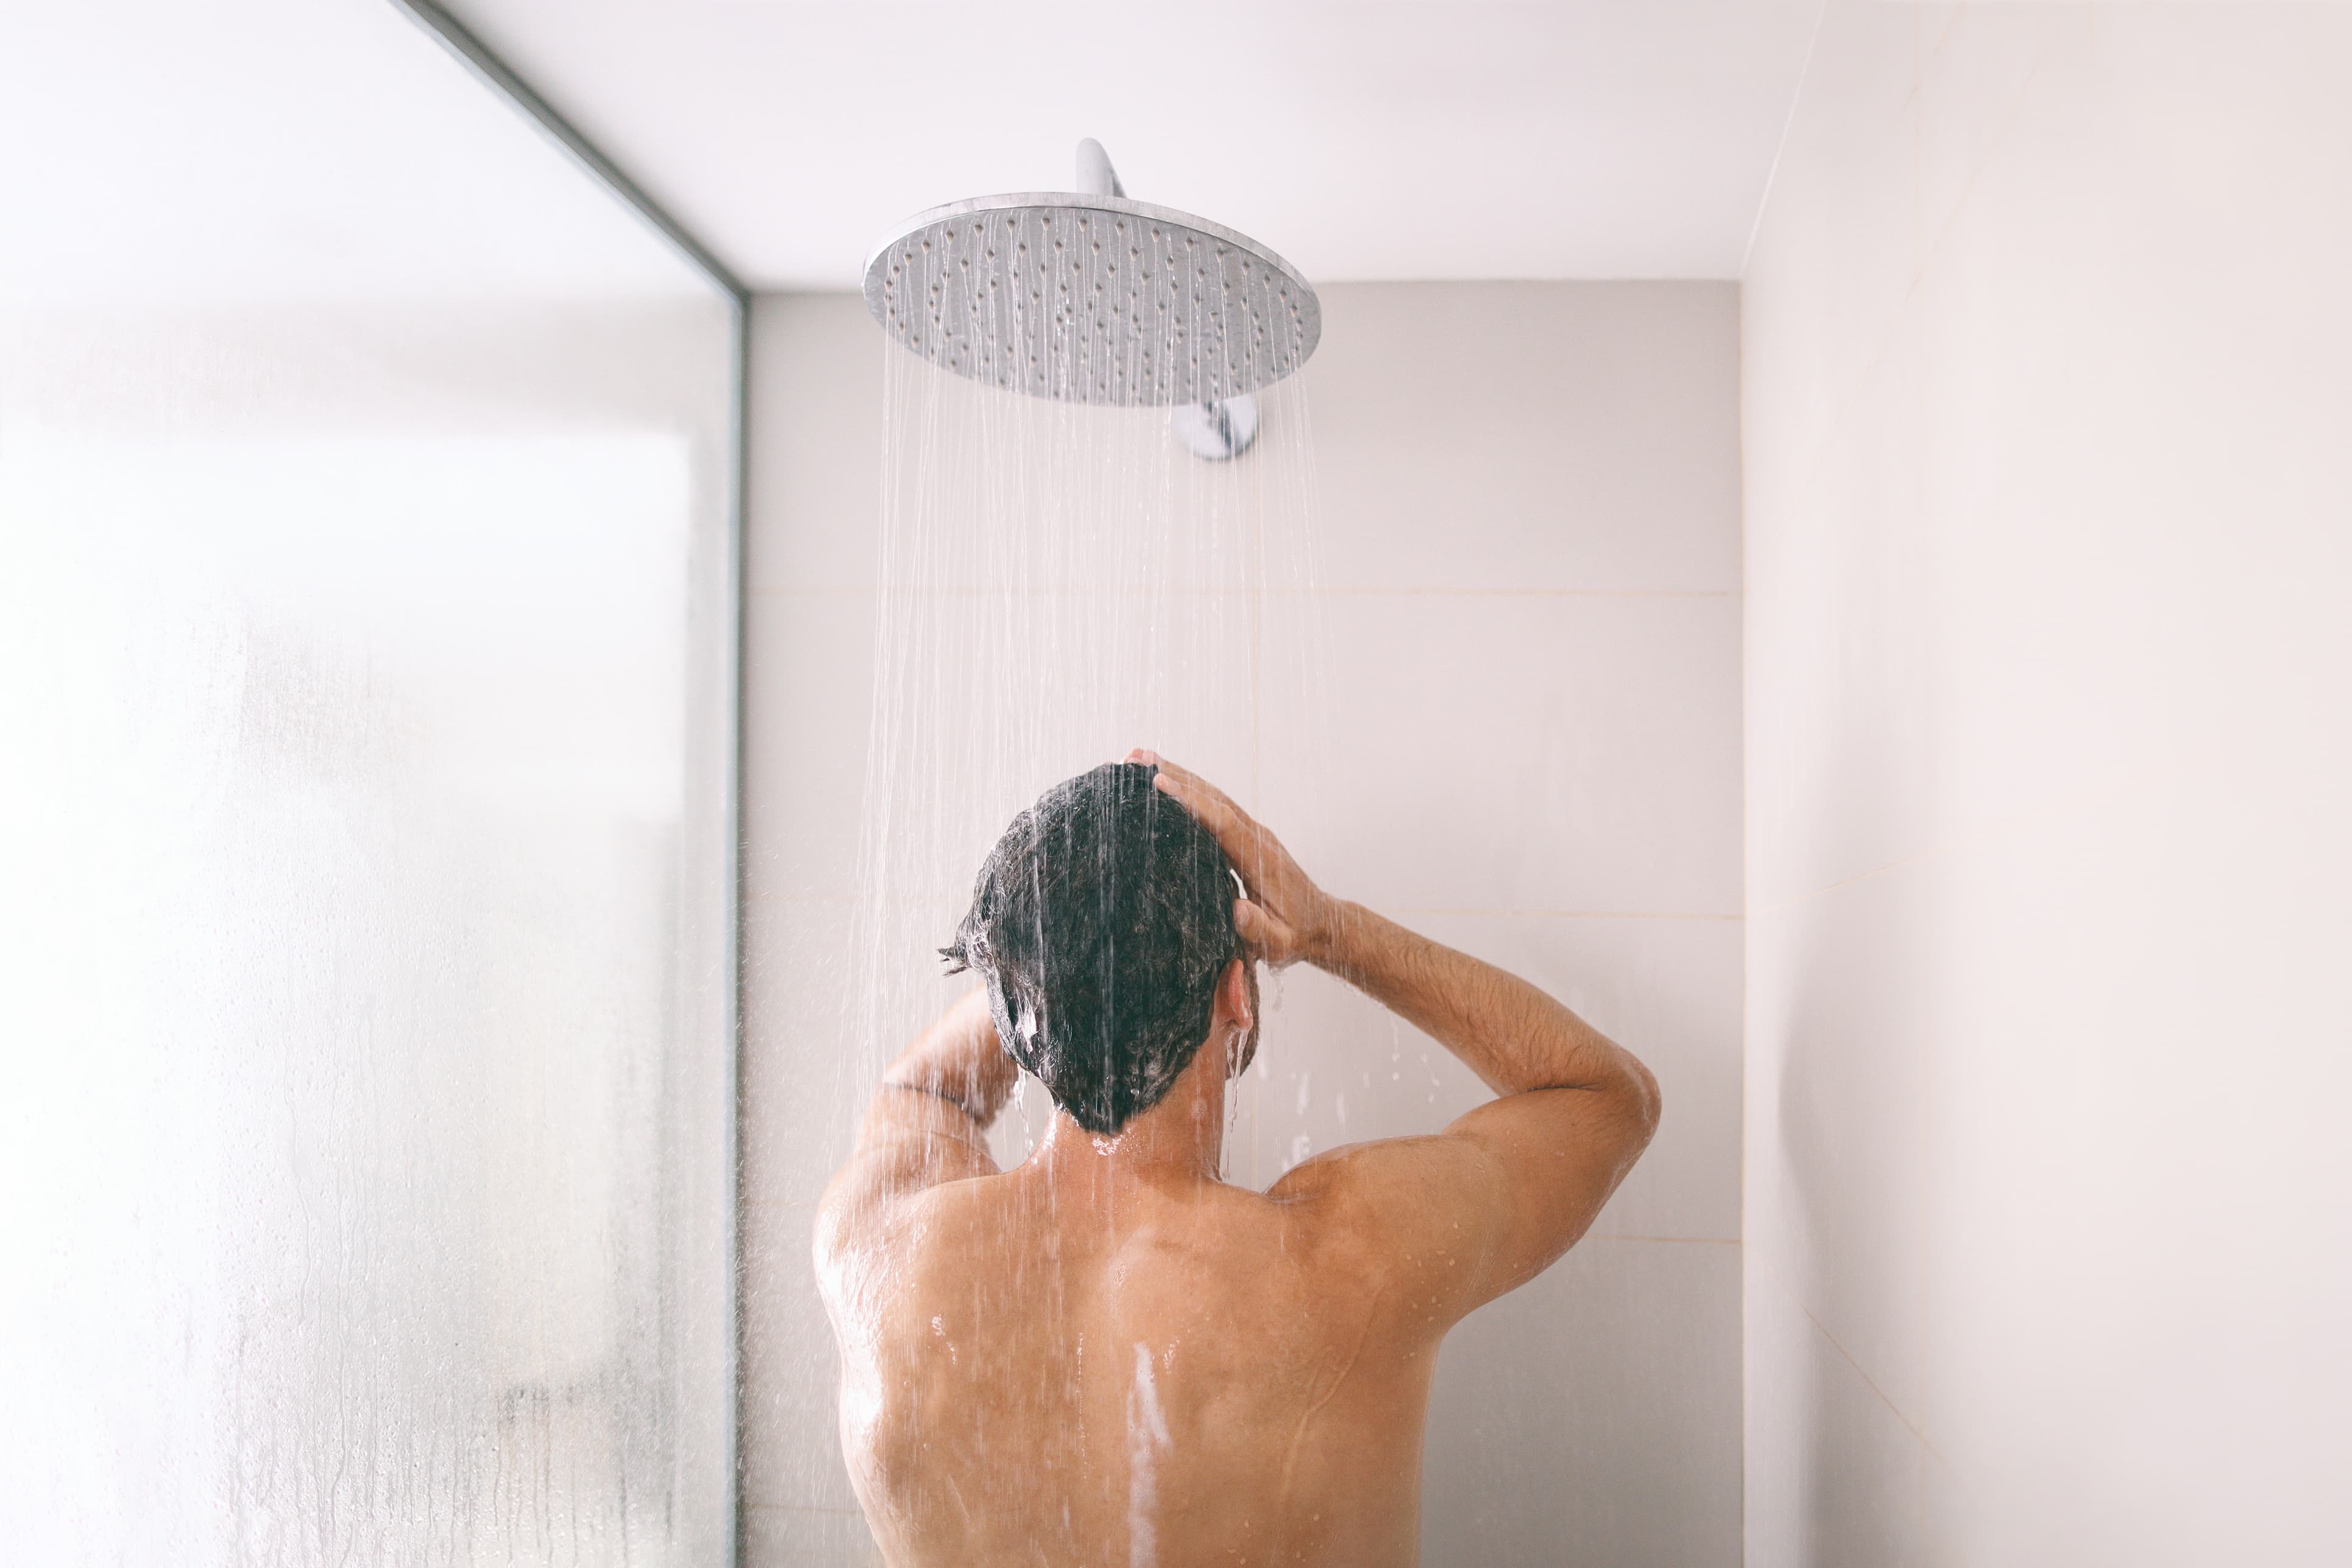 Shower smart